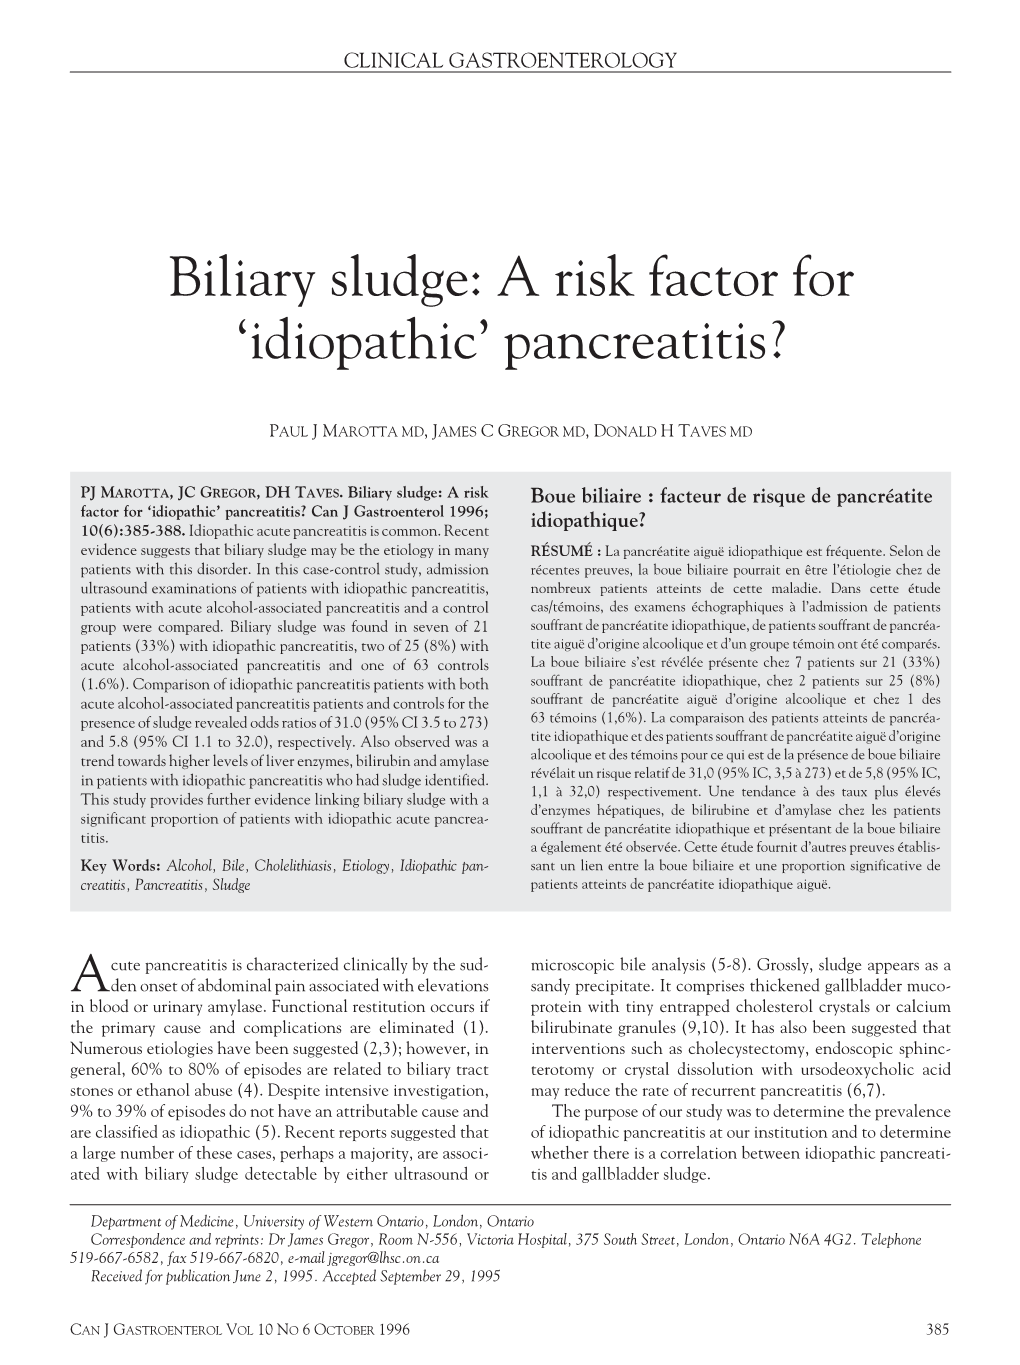 Biliary Sludge: a Risk Factor for ‘Idiopathic’ Pancreatitis?